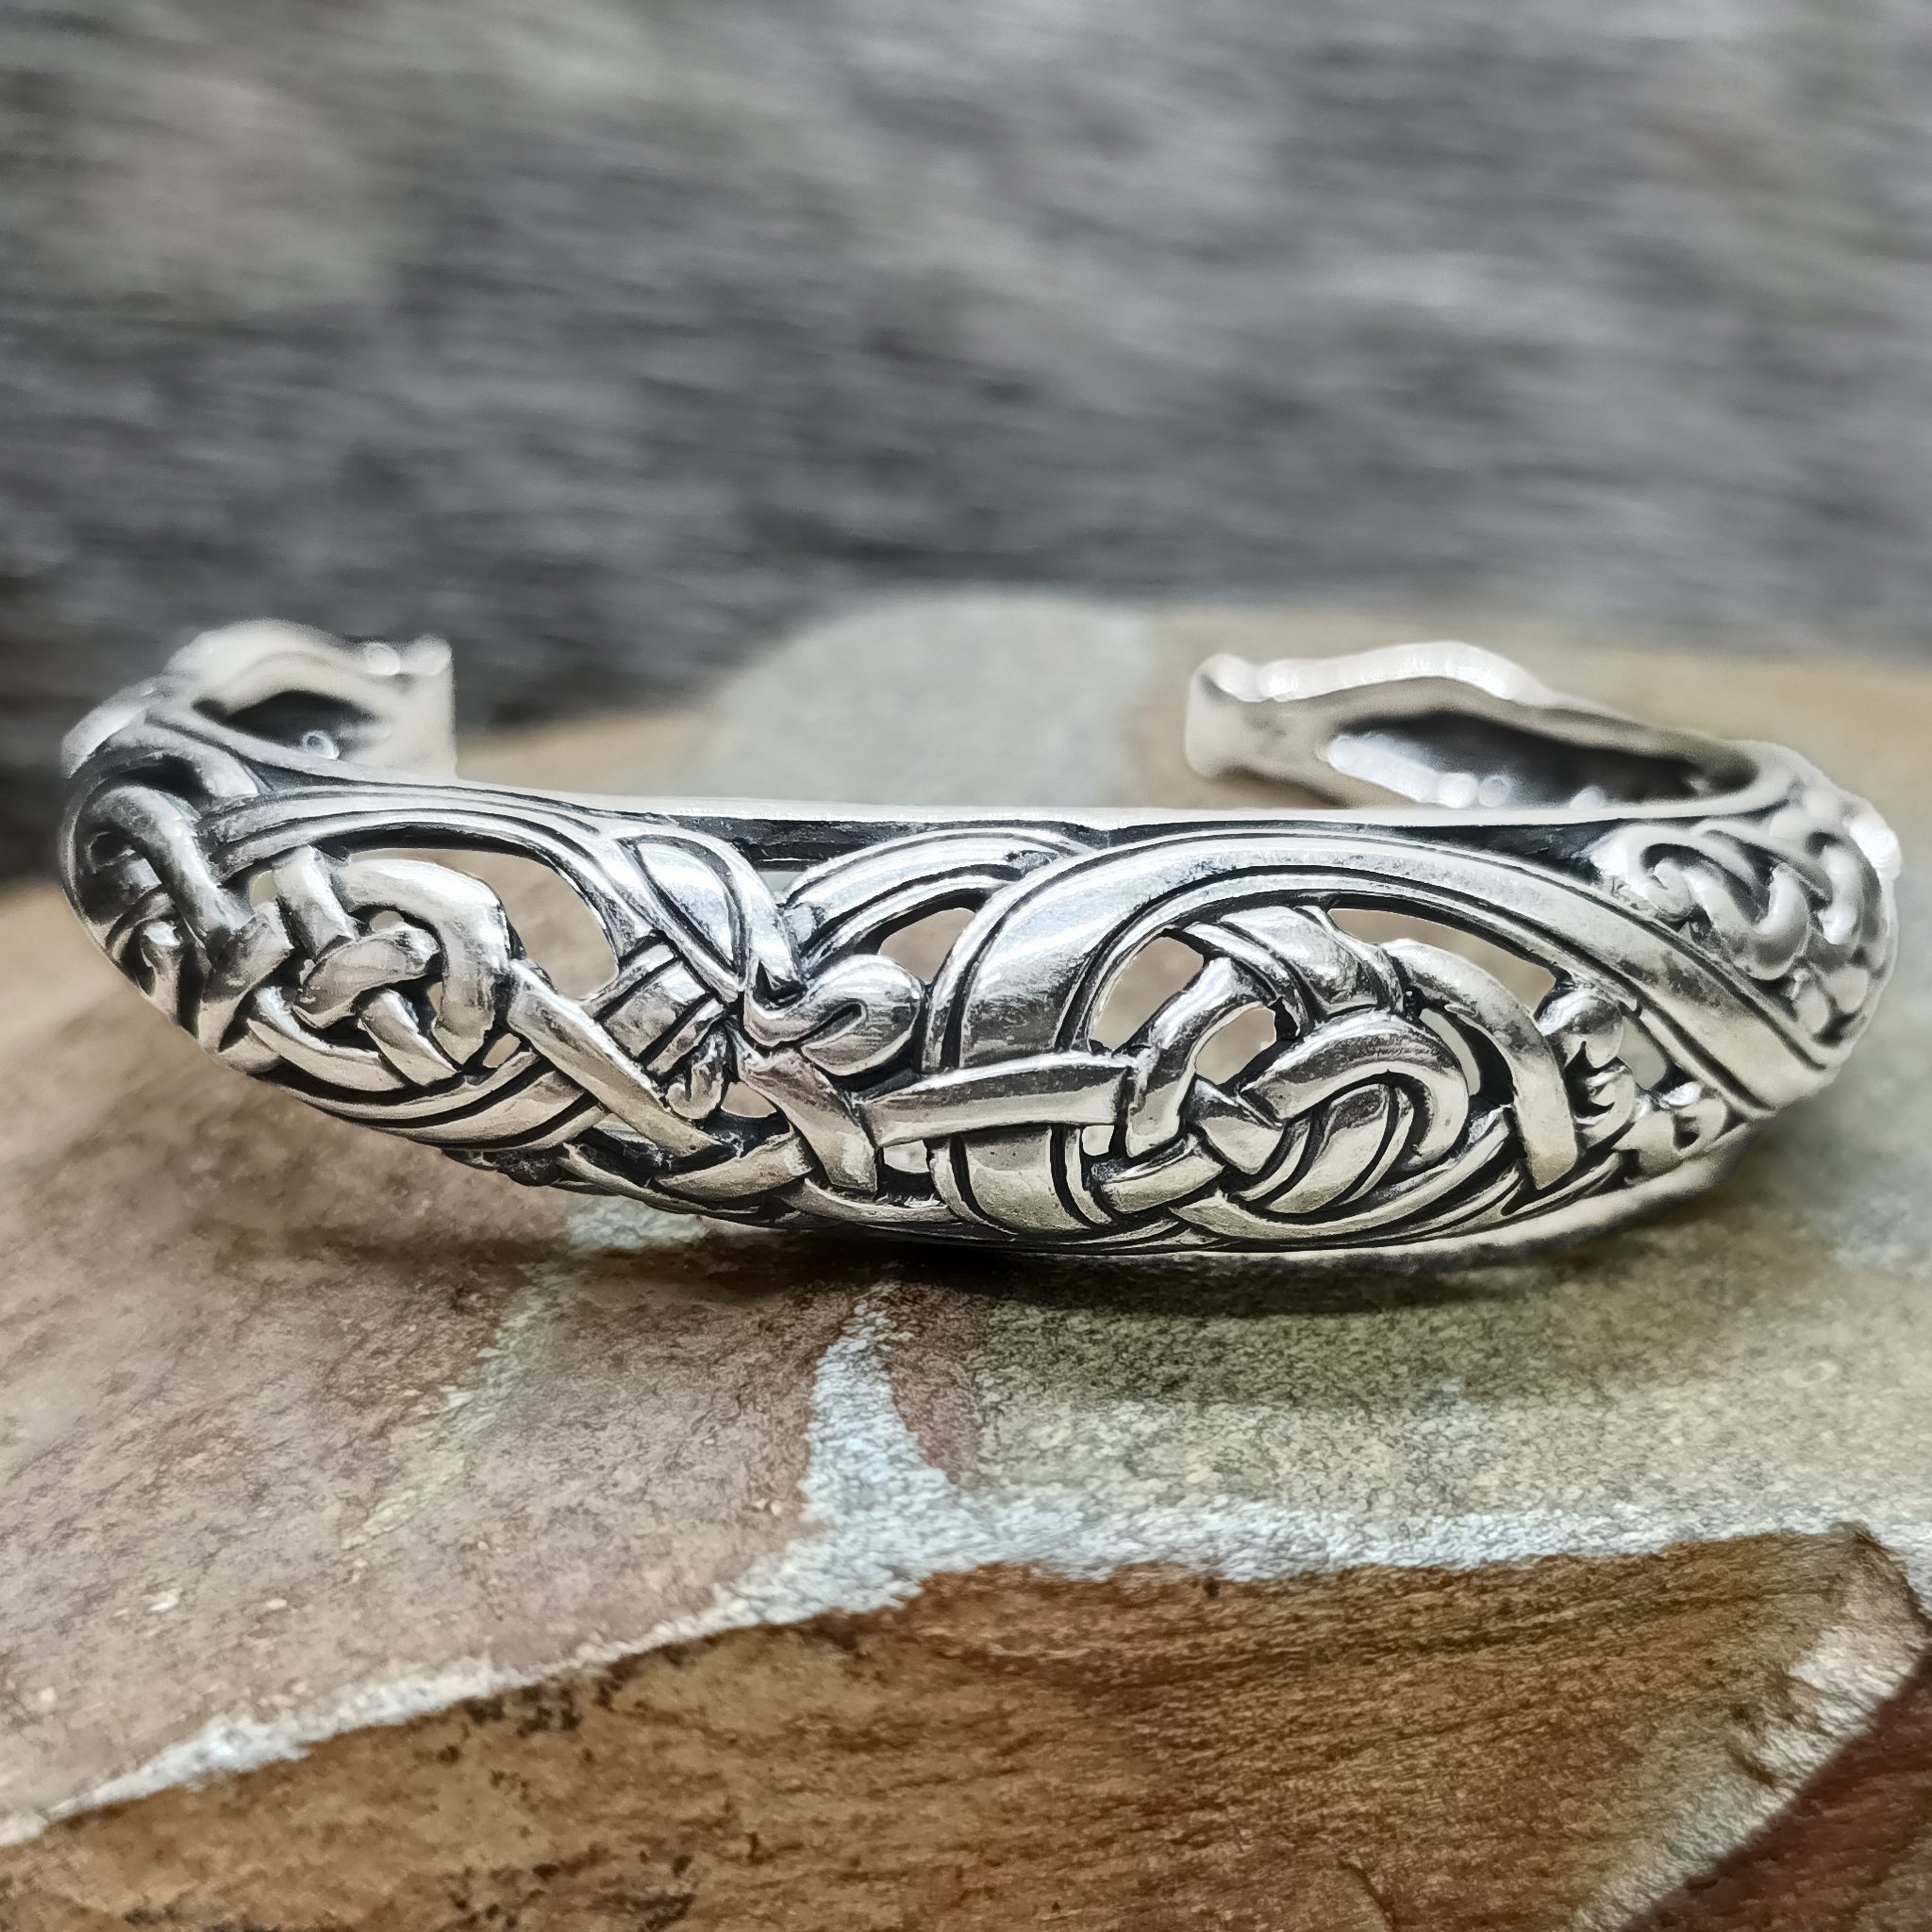 Silver Urnes Dragon Bracelet on Rock - Front View